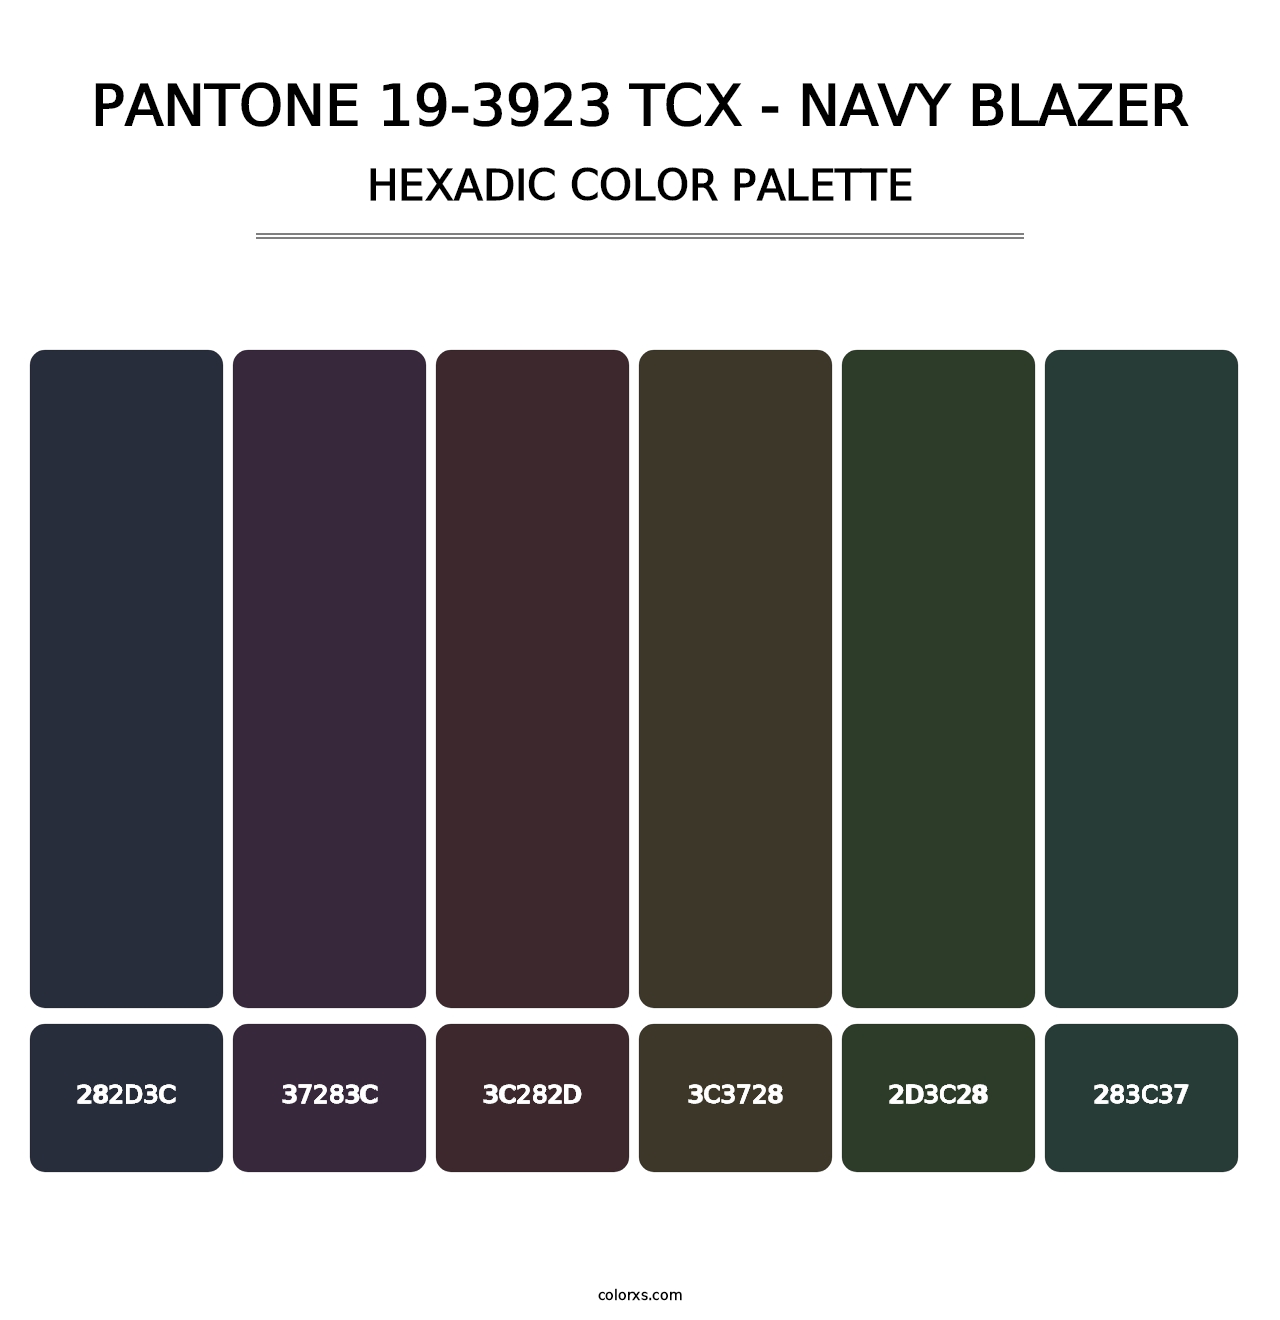 PANTONE 19-3923 TCX - Navy Blazer - Hexadic Color Palette